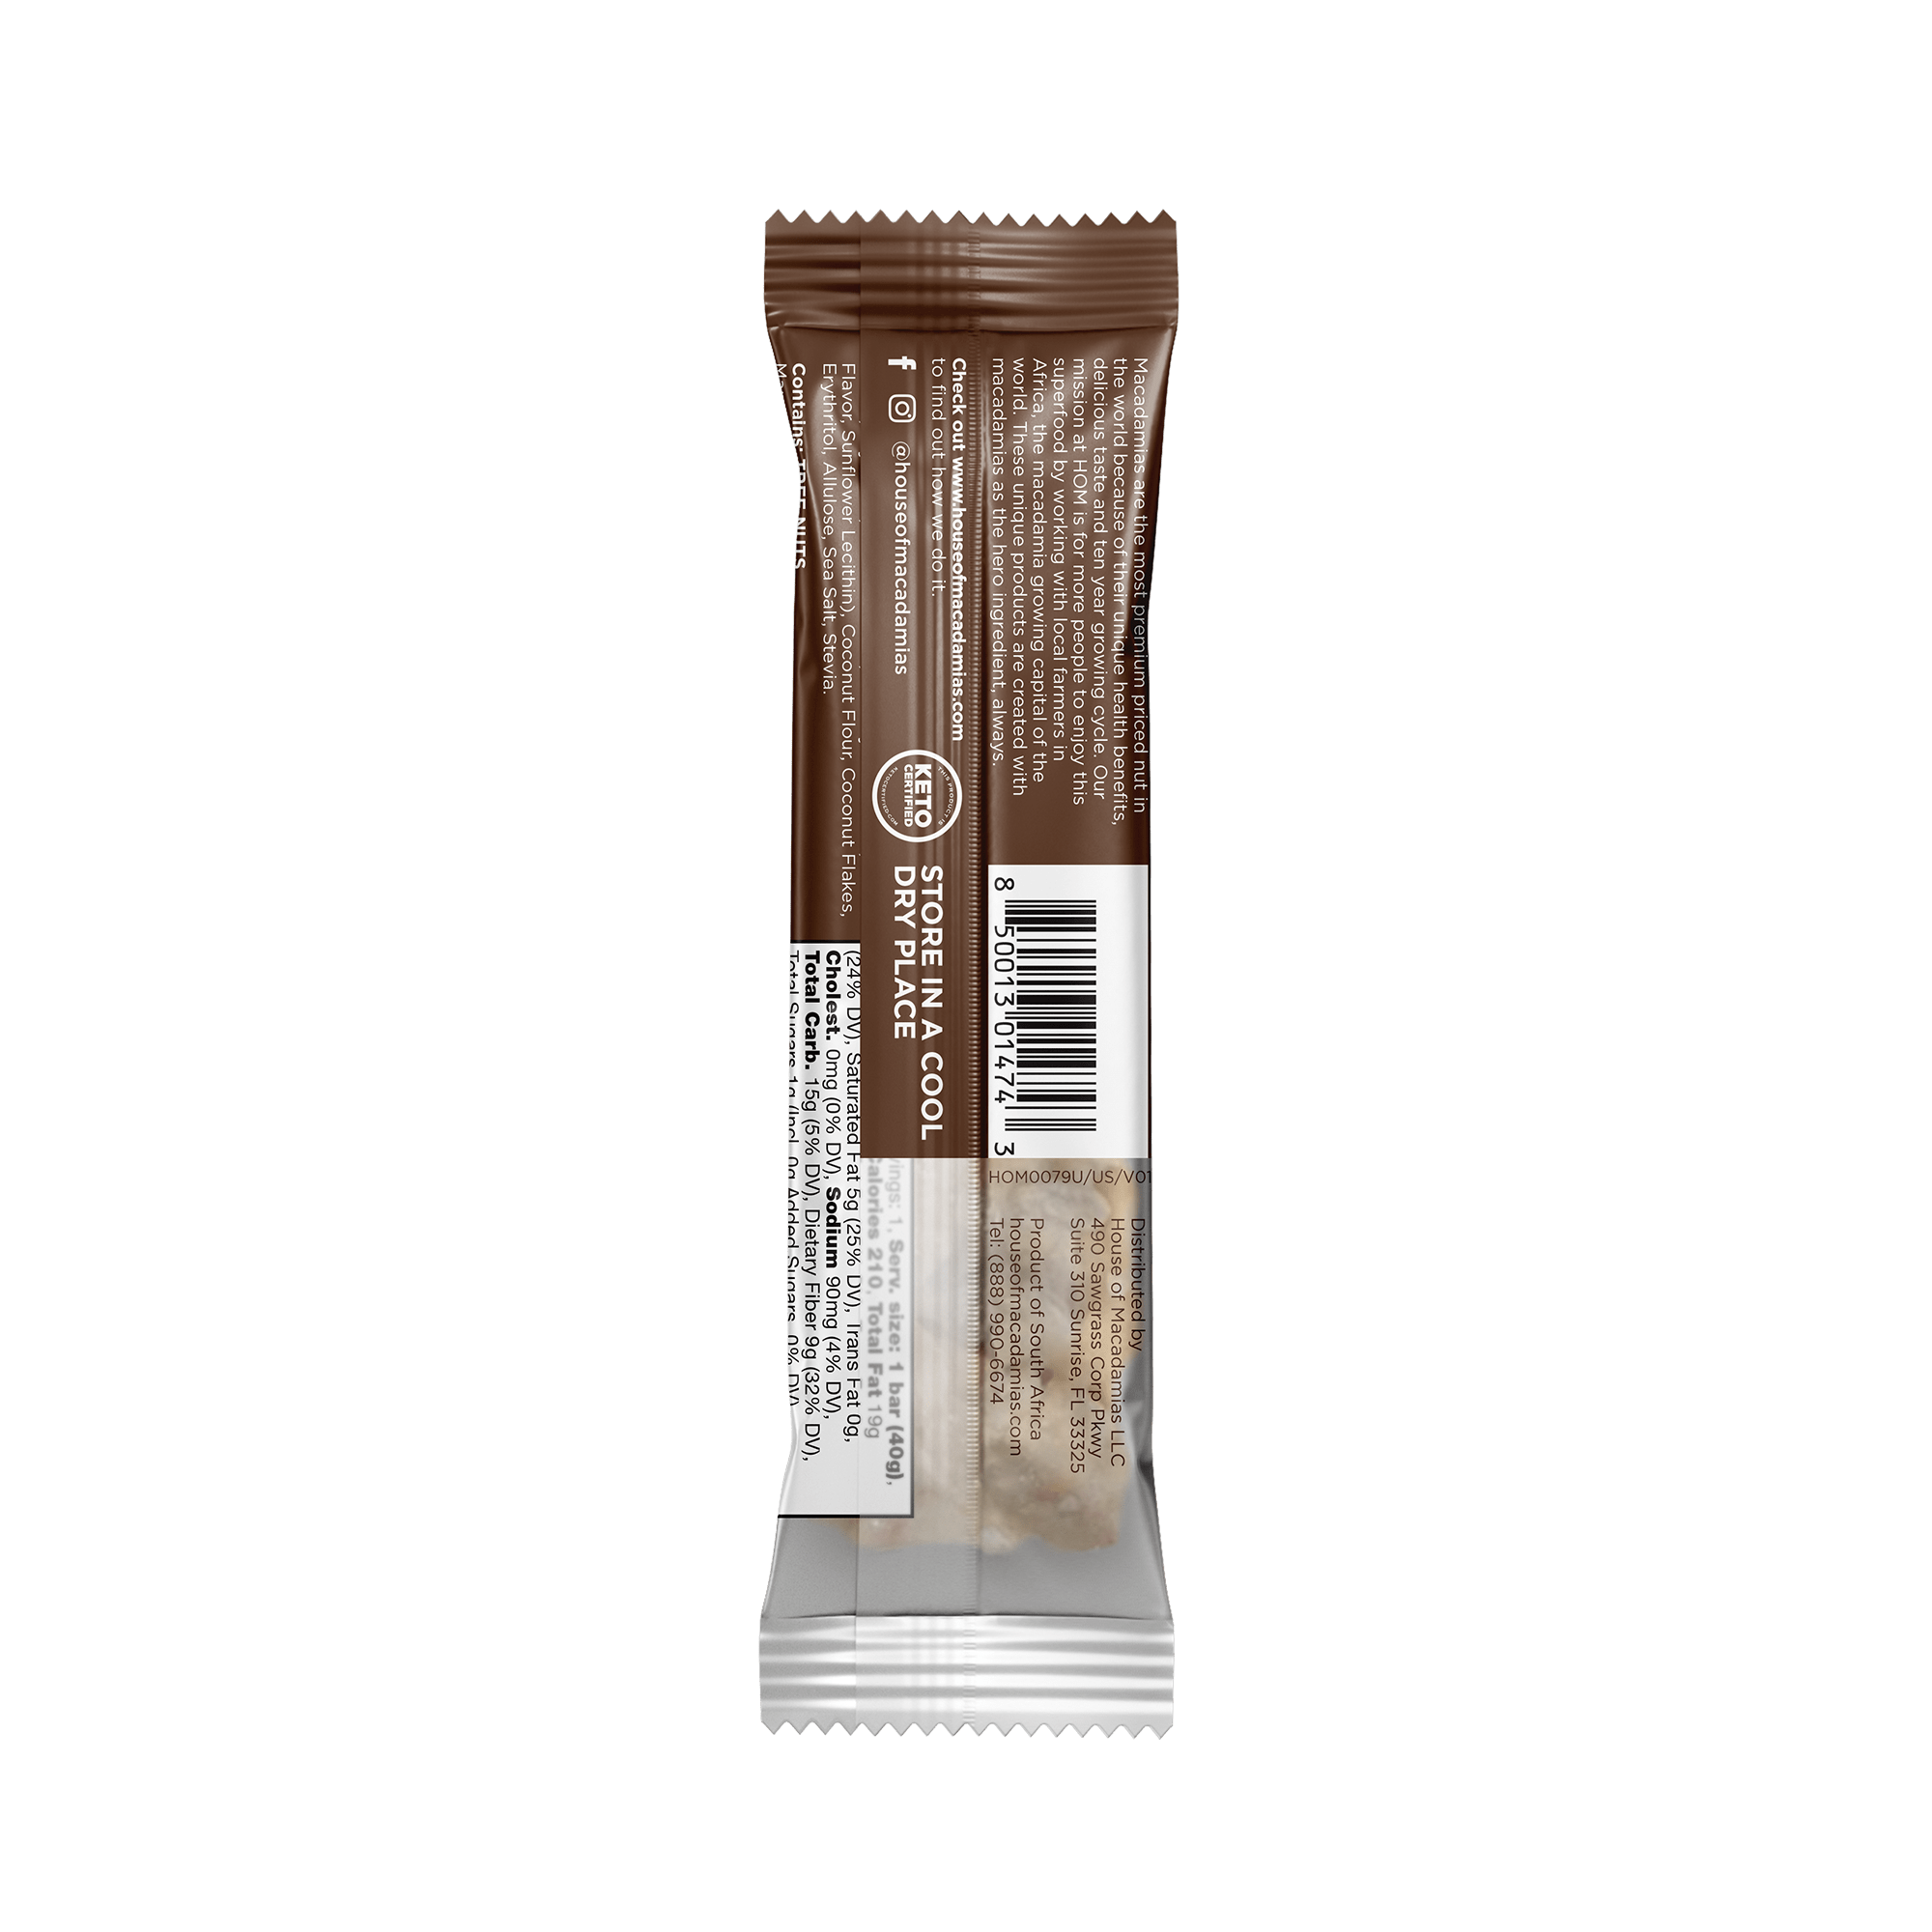 Chocolate Macadamia Snack Bar (12 Bars)